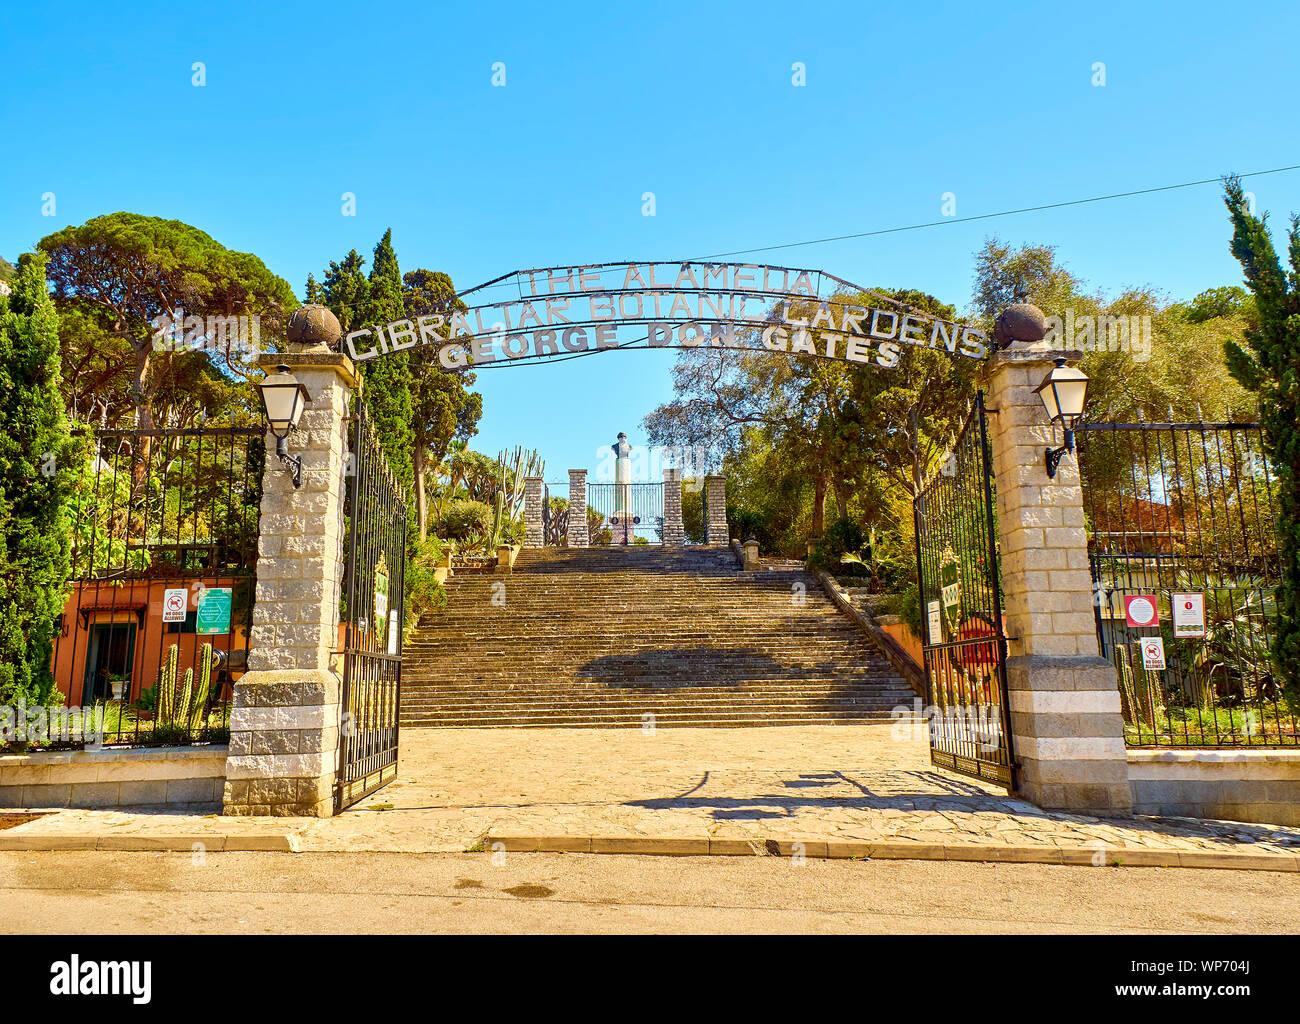 George Don Gate, principal gate of the Gibraltar Botanic Garden. Stock Photo